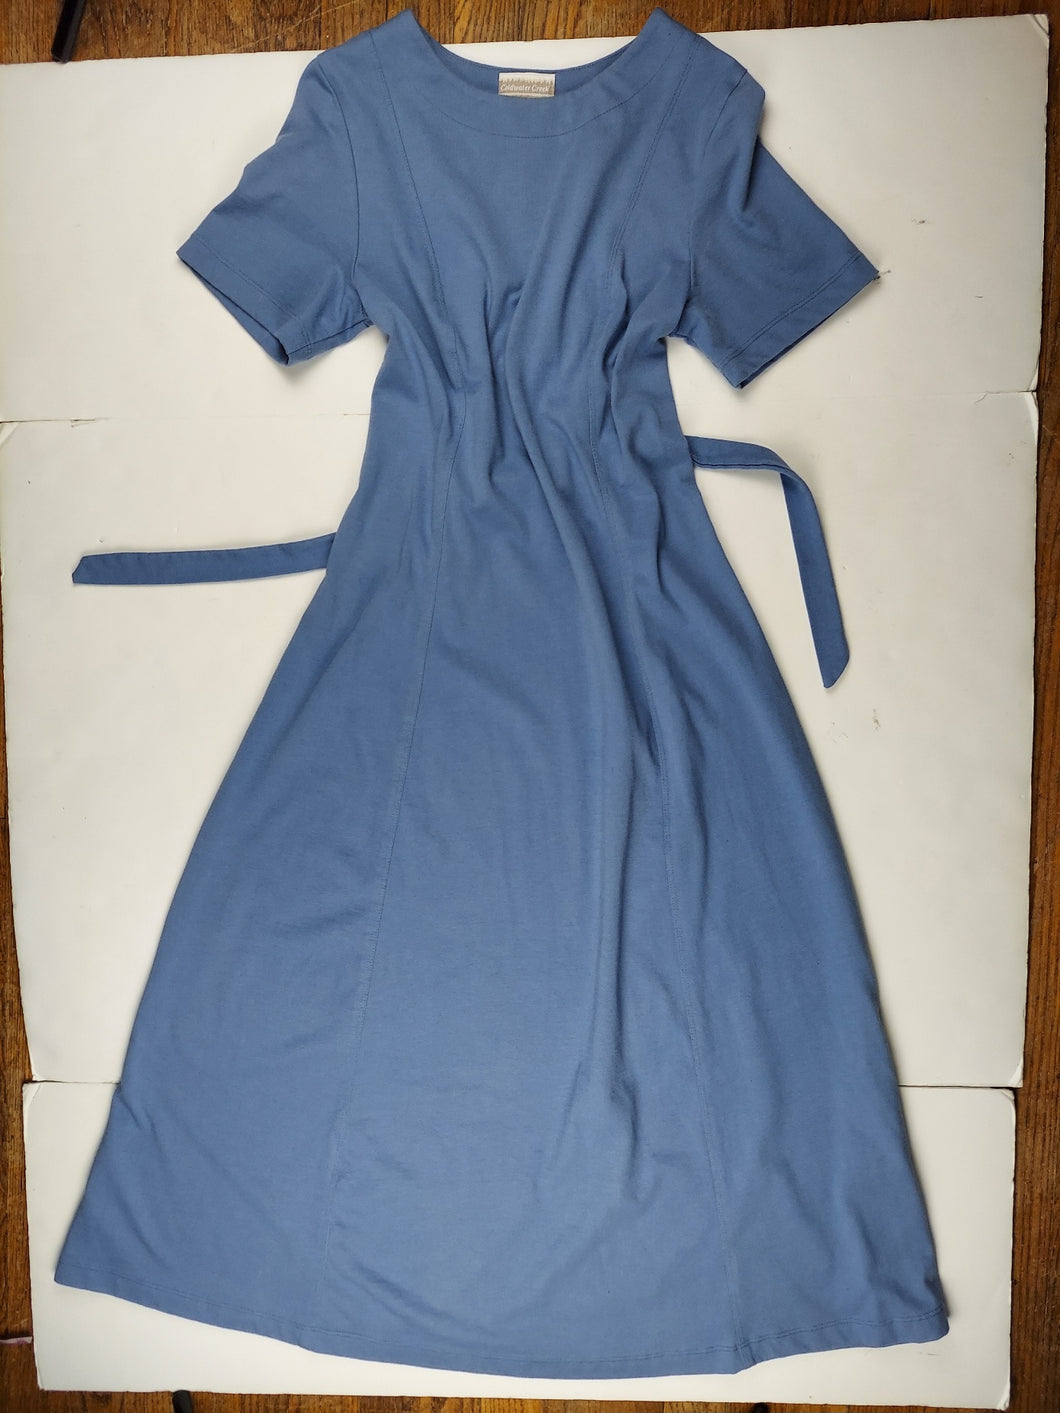 SMALL/ MEDIUM Periwinkle blue maxi dress with princess seam